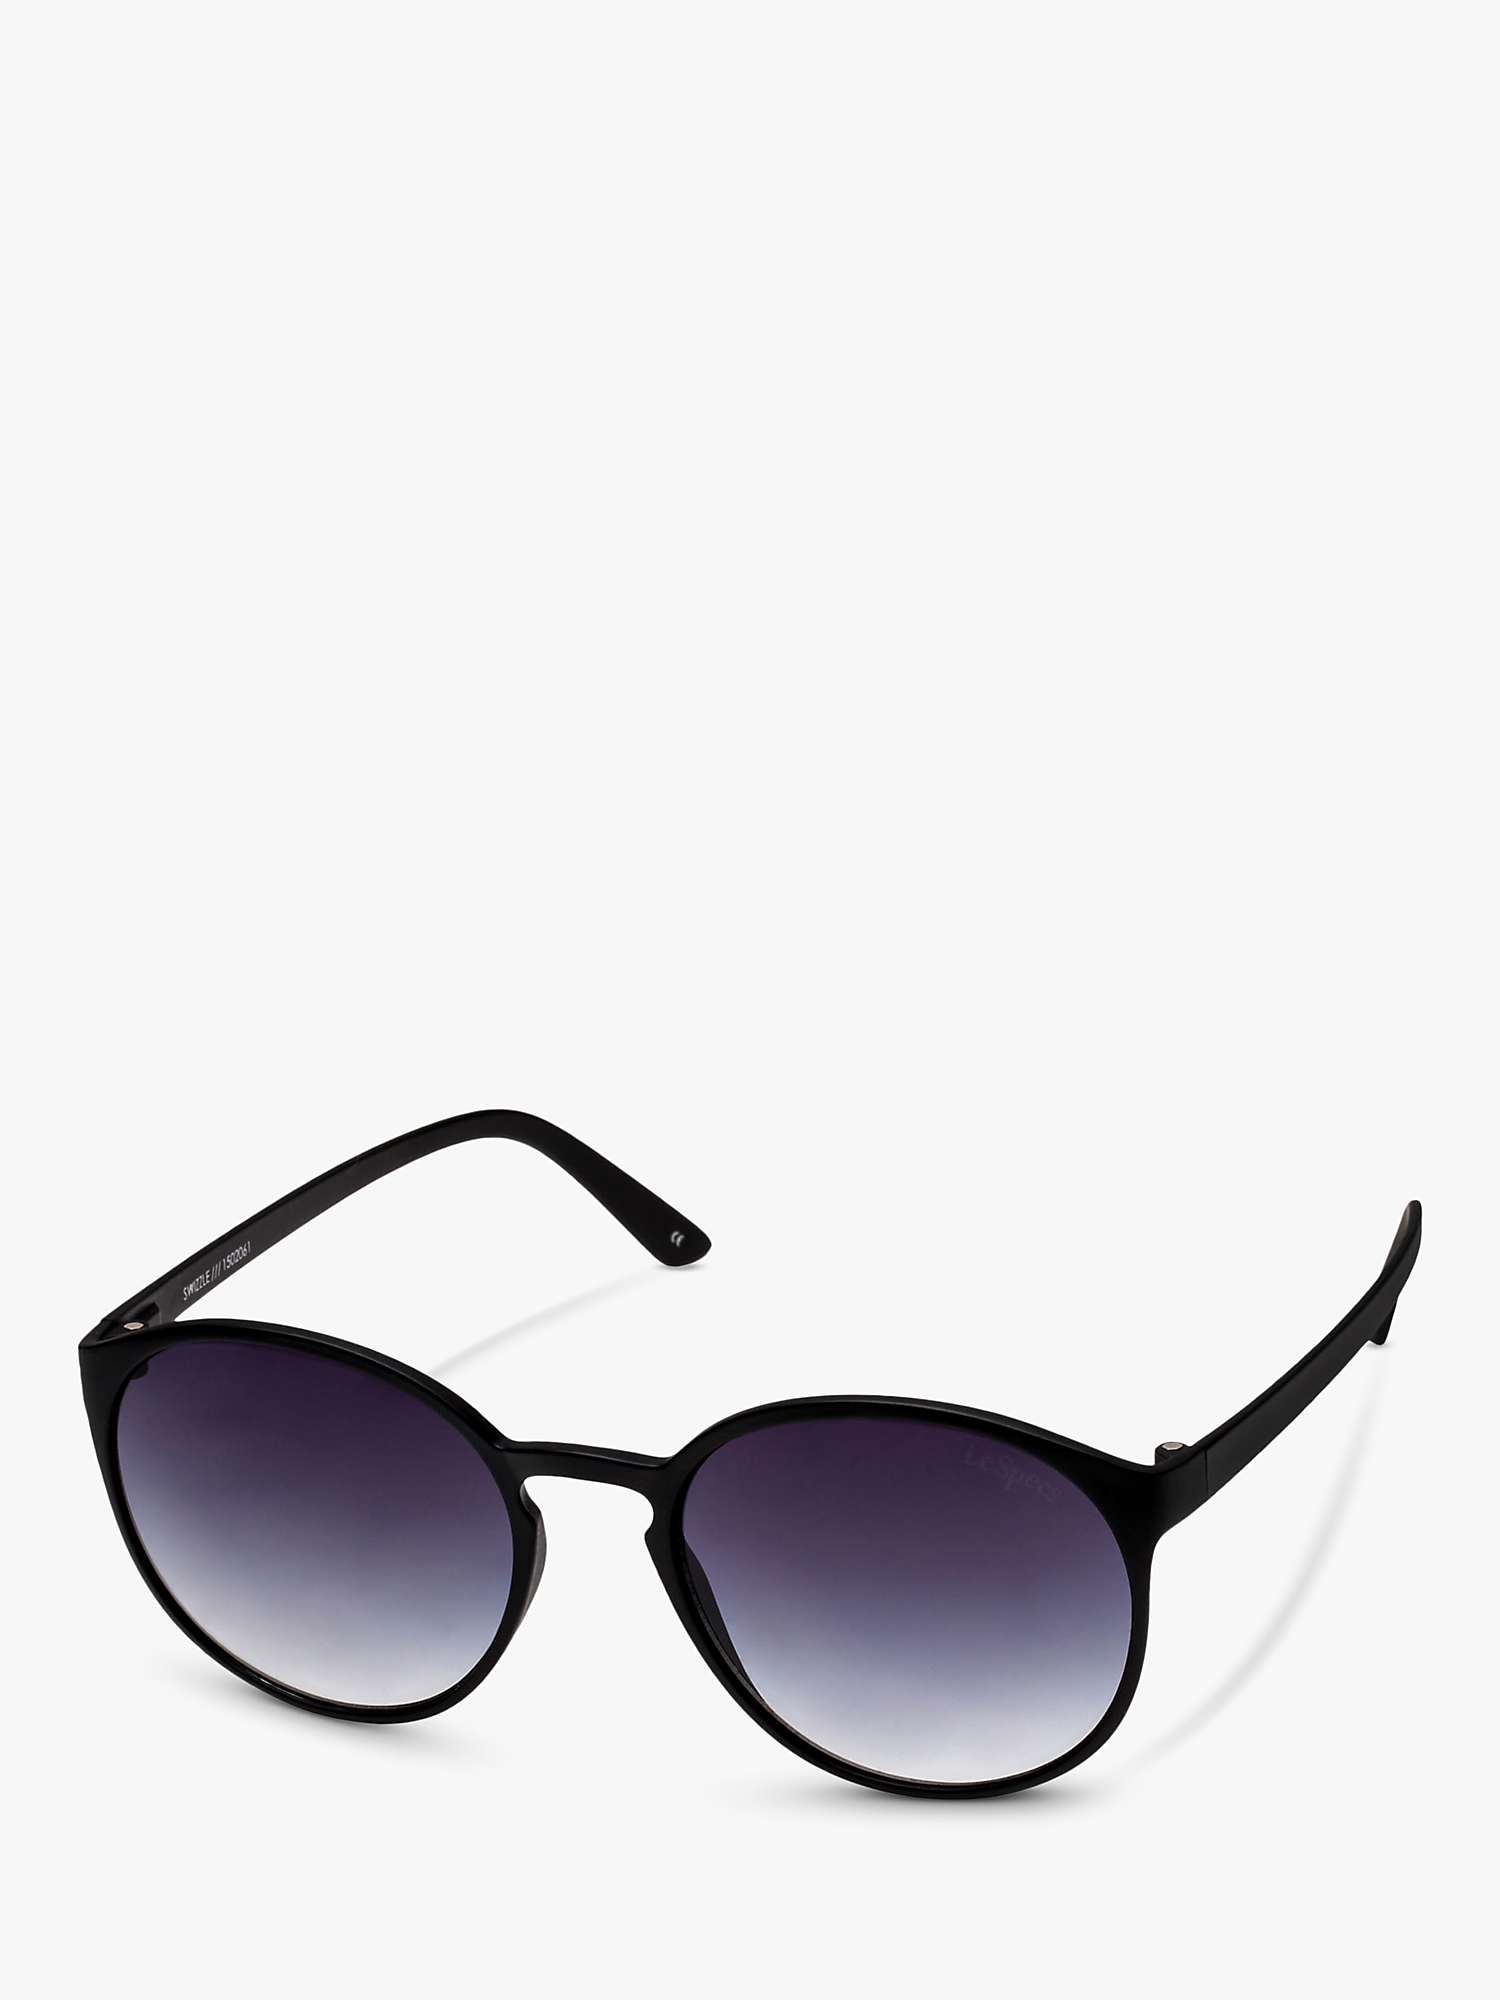 Buy Le Specs L5000170 Unisex Round Sunglasses, Black/Grey Gradient Online at johnlewis.com